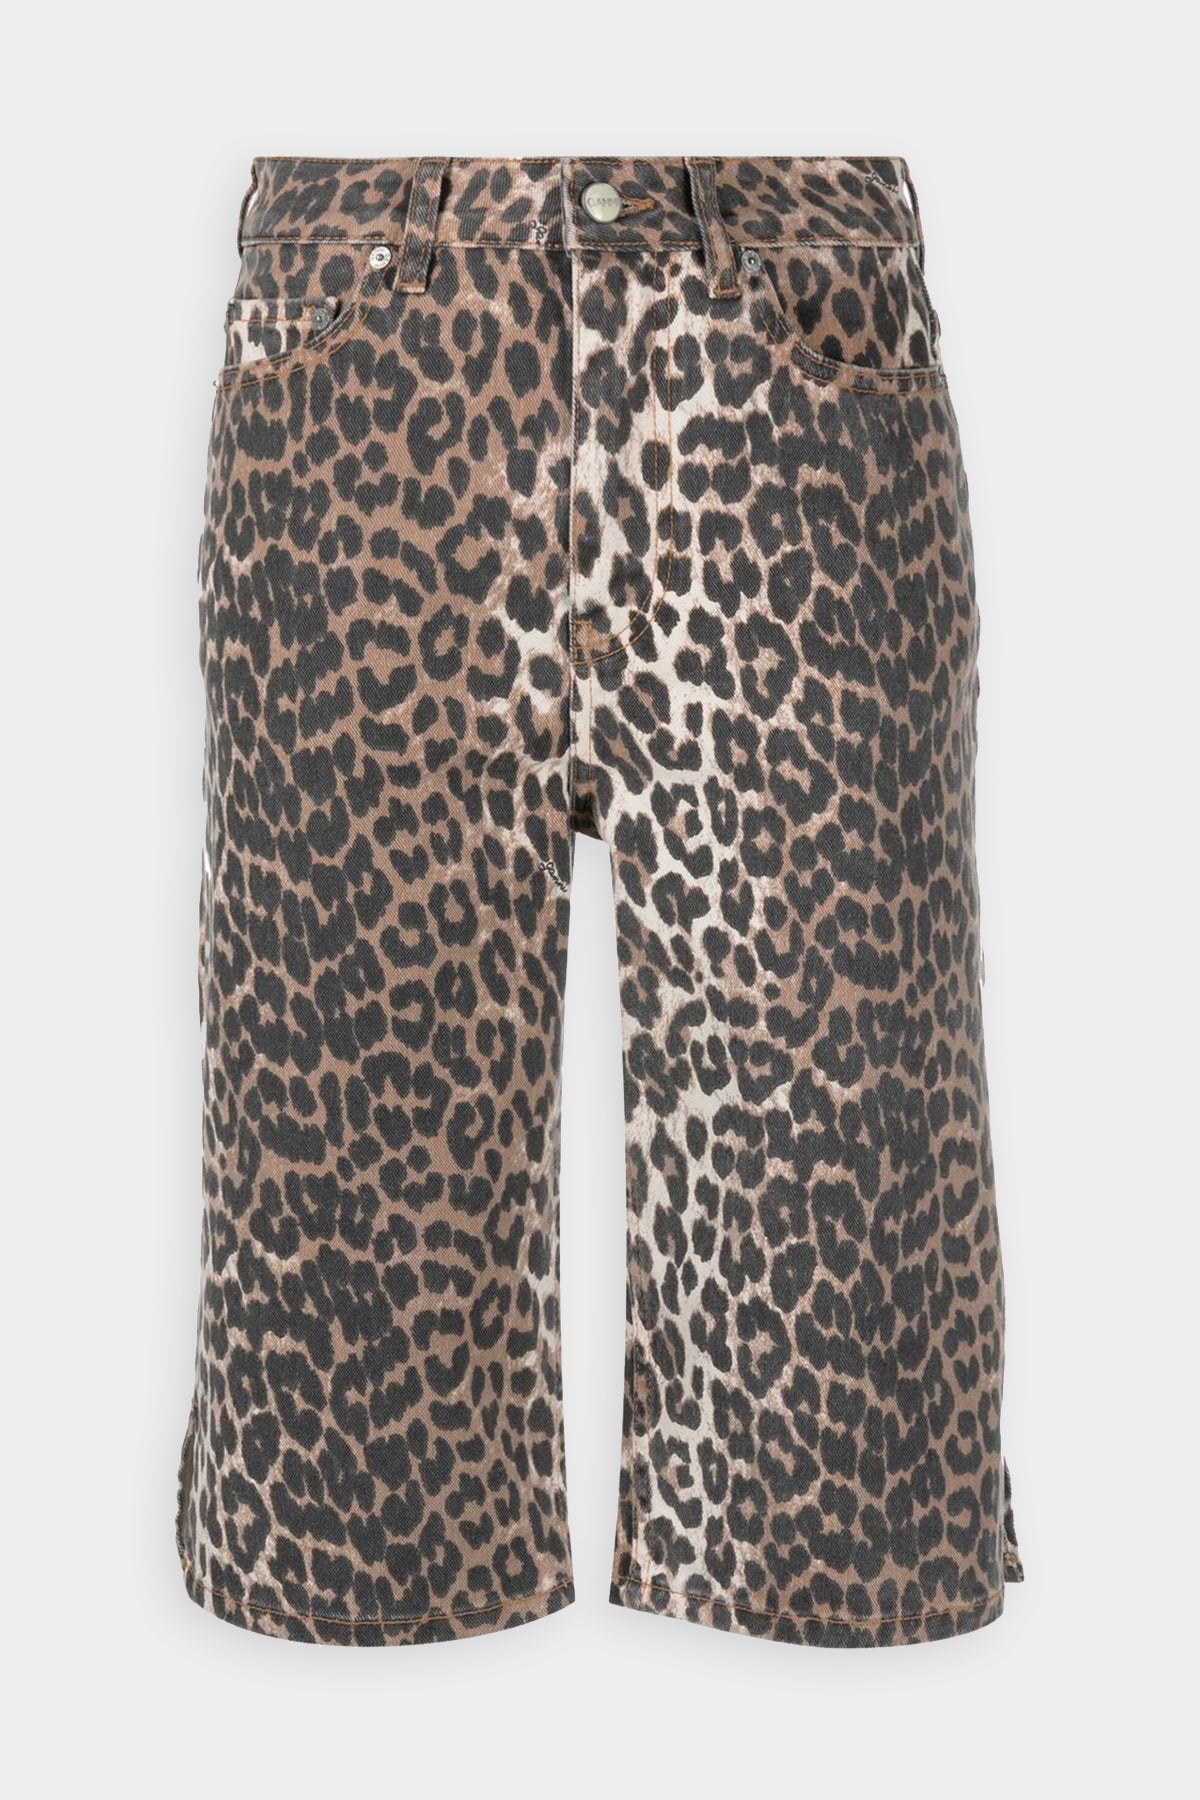 Print Denim Knee Length Shorts in Leopard - shop-olivia.com